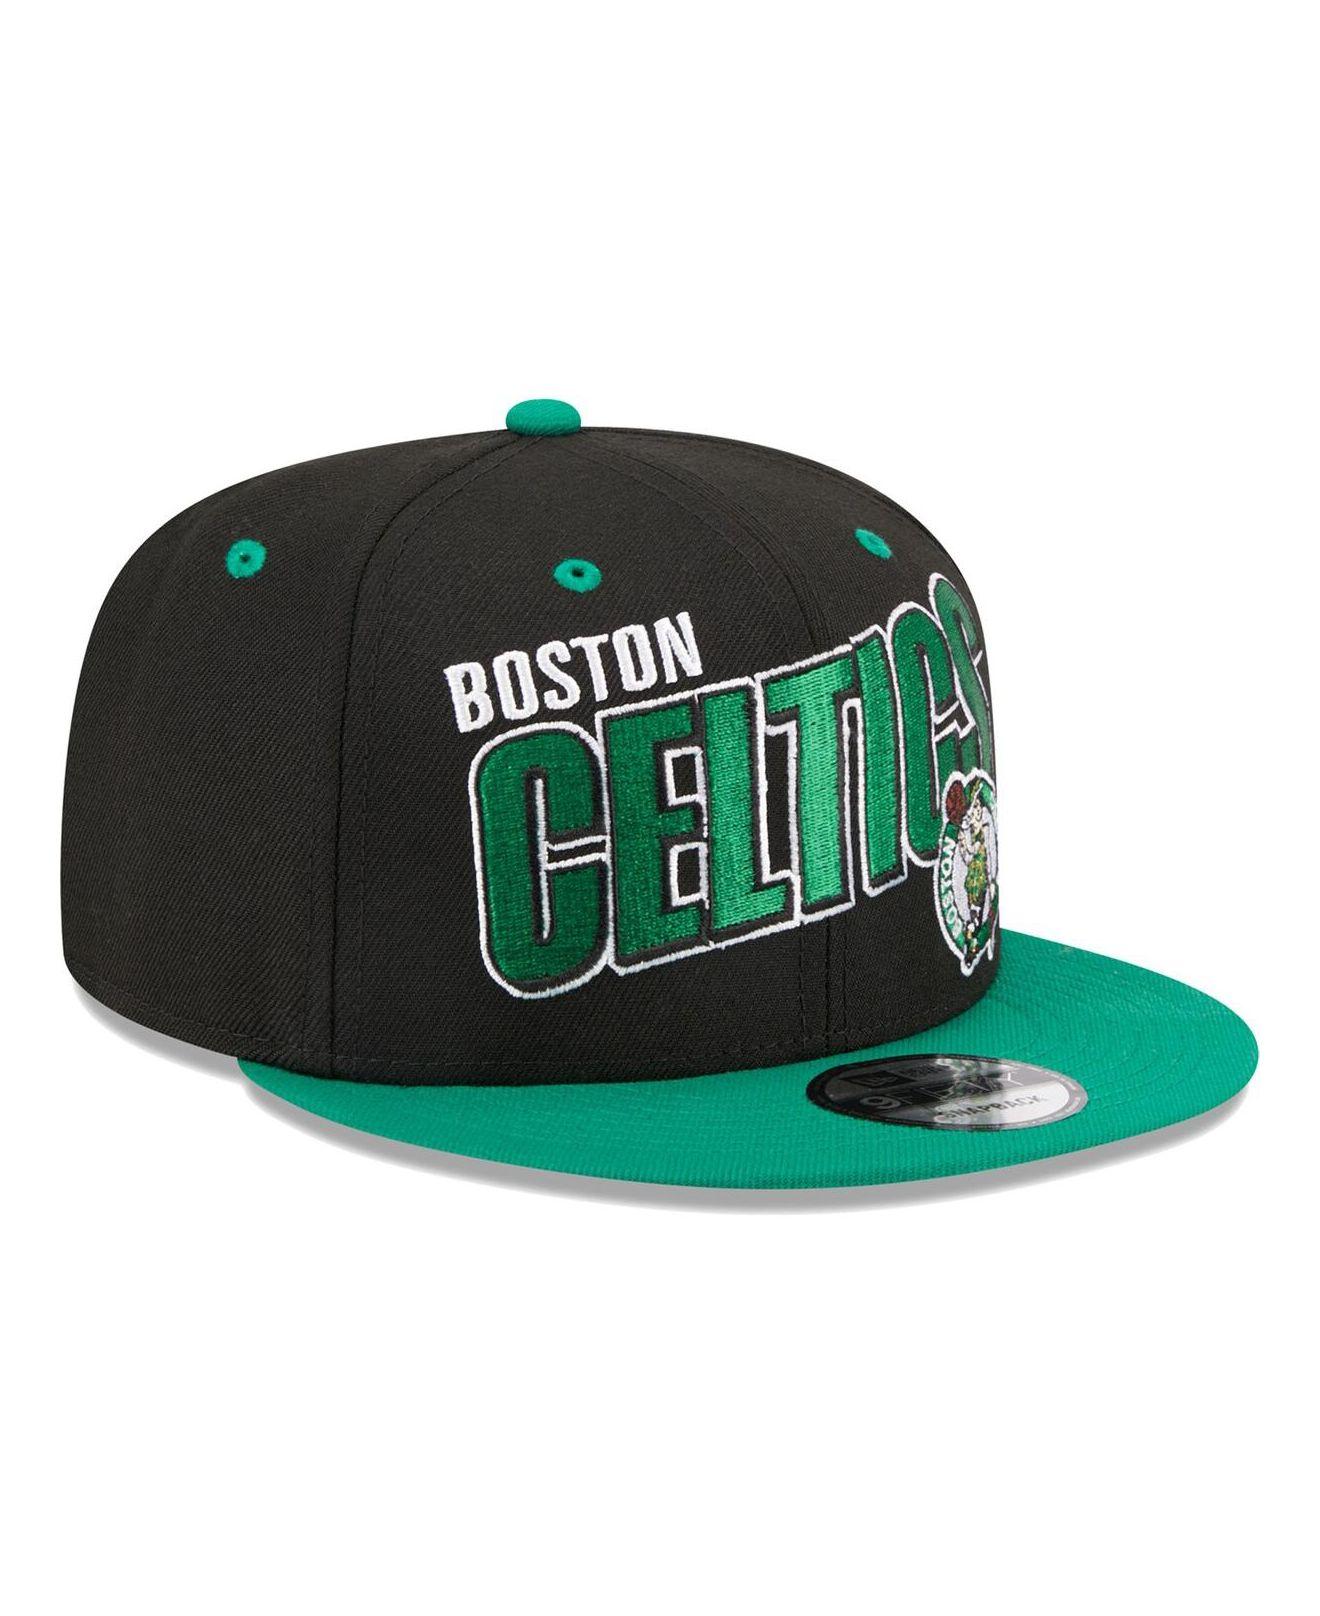 Mitchell & Ness Reframe Retro Snapback Adjustable Cap Boston Celtics Off-White / One Size